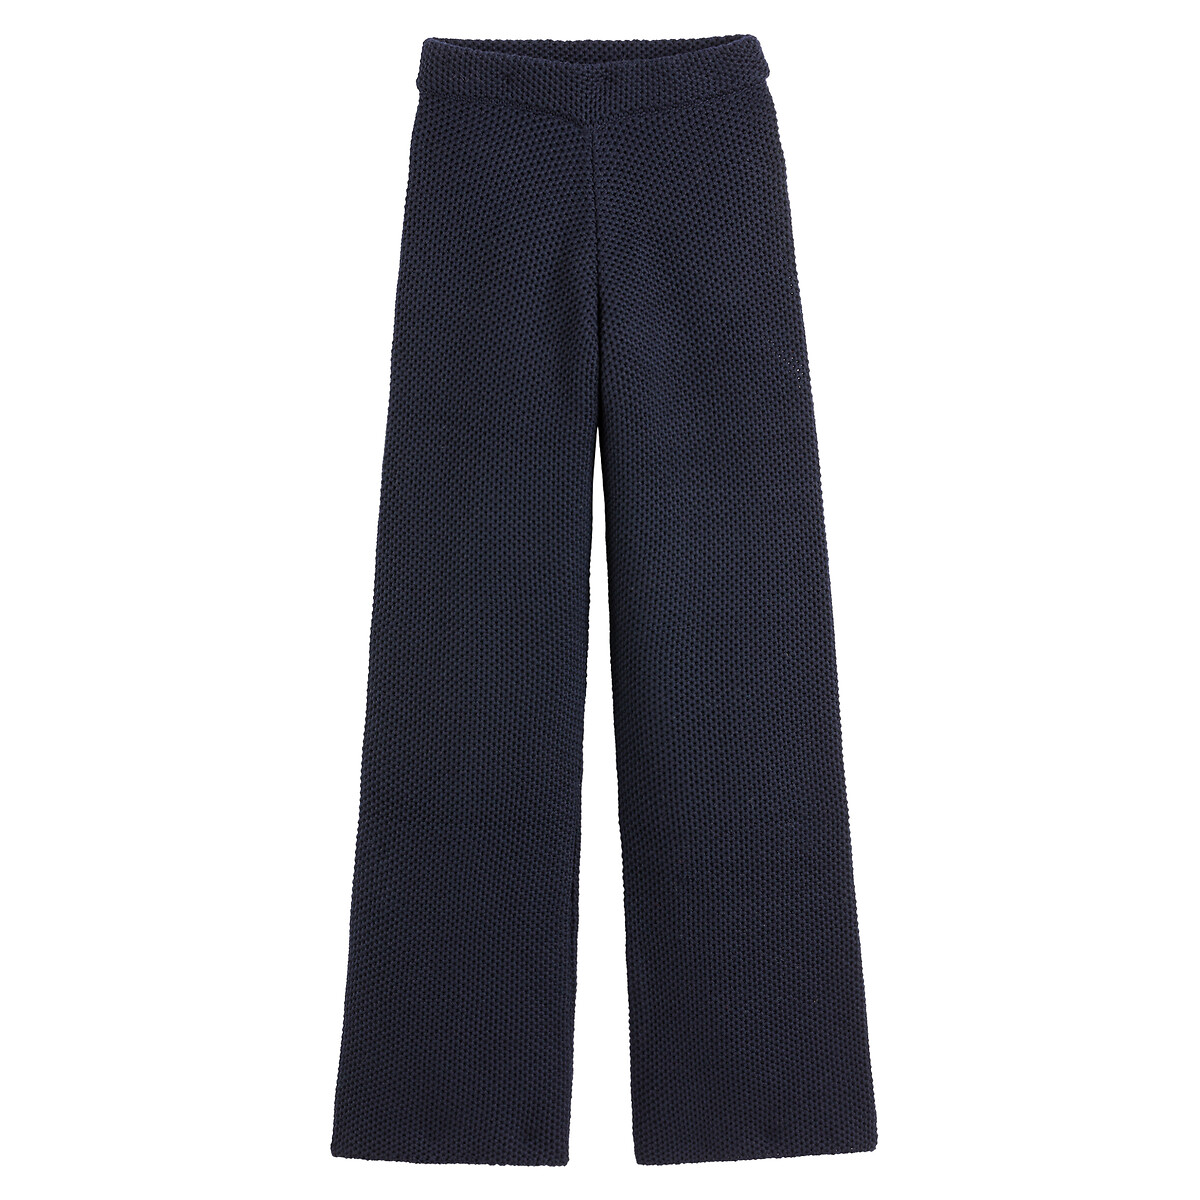 Merino Wool Bootcut Trousers with High Waist, Length 29"